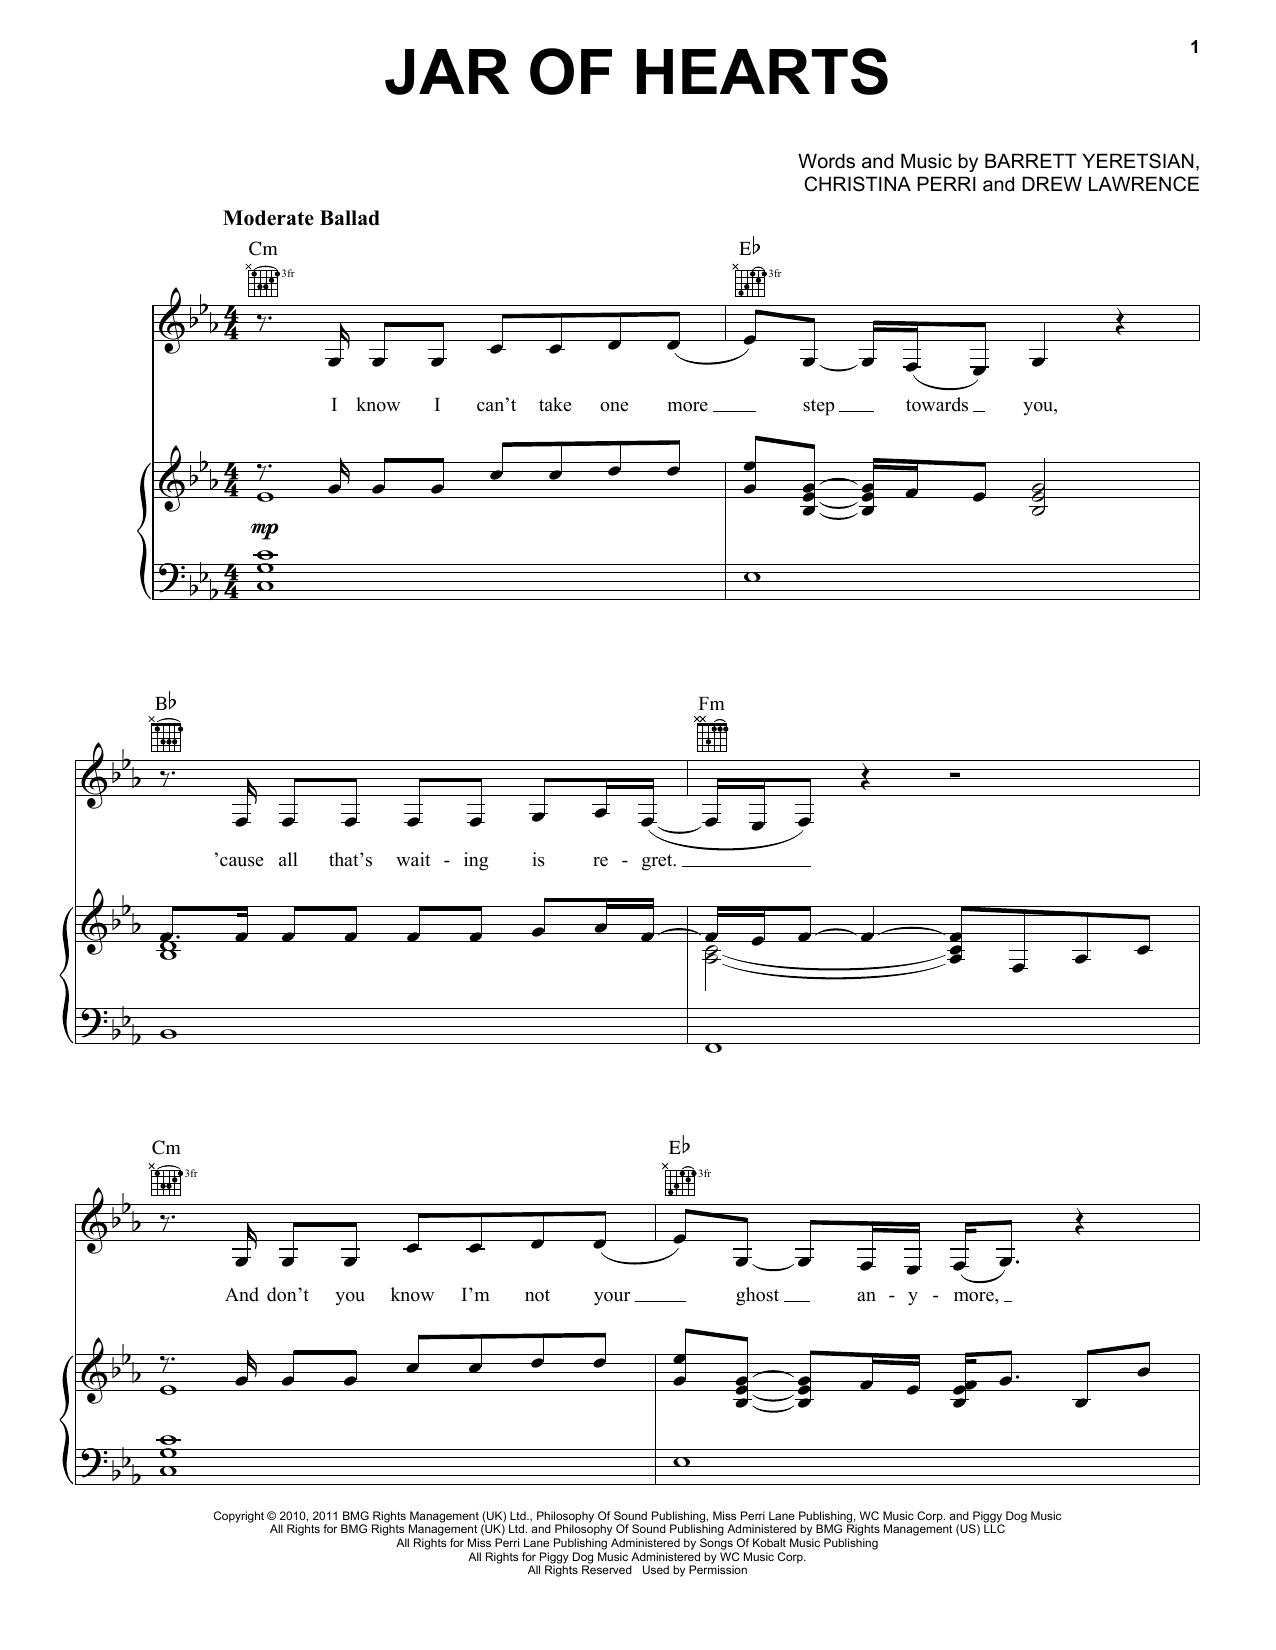 Christina Perri Jar Of Hearts Sheet Music Notes & Chords for Tenor Saxophone - Download or Print PDF